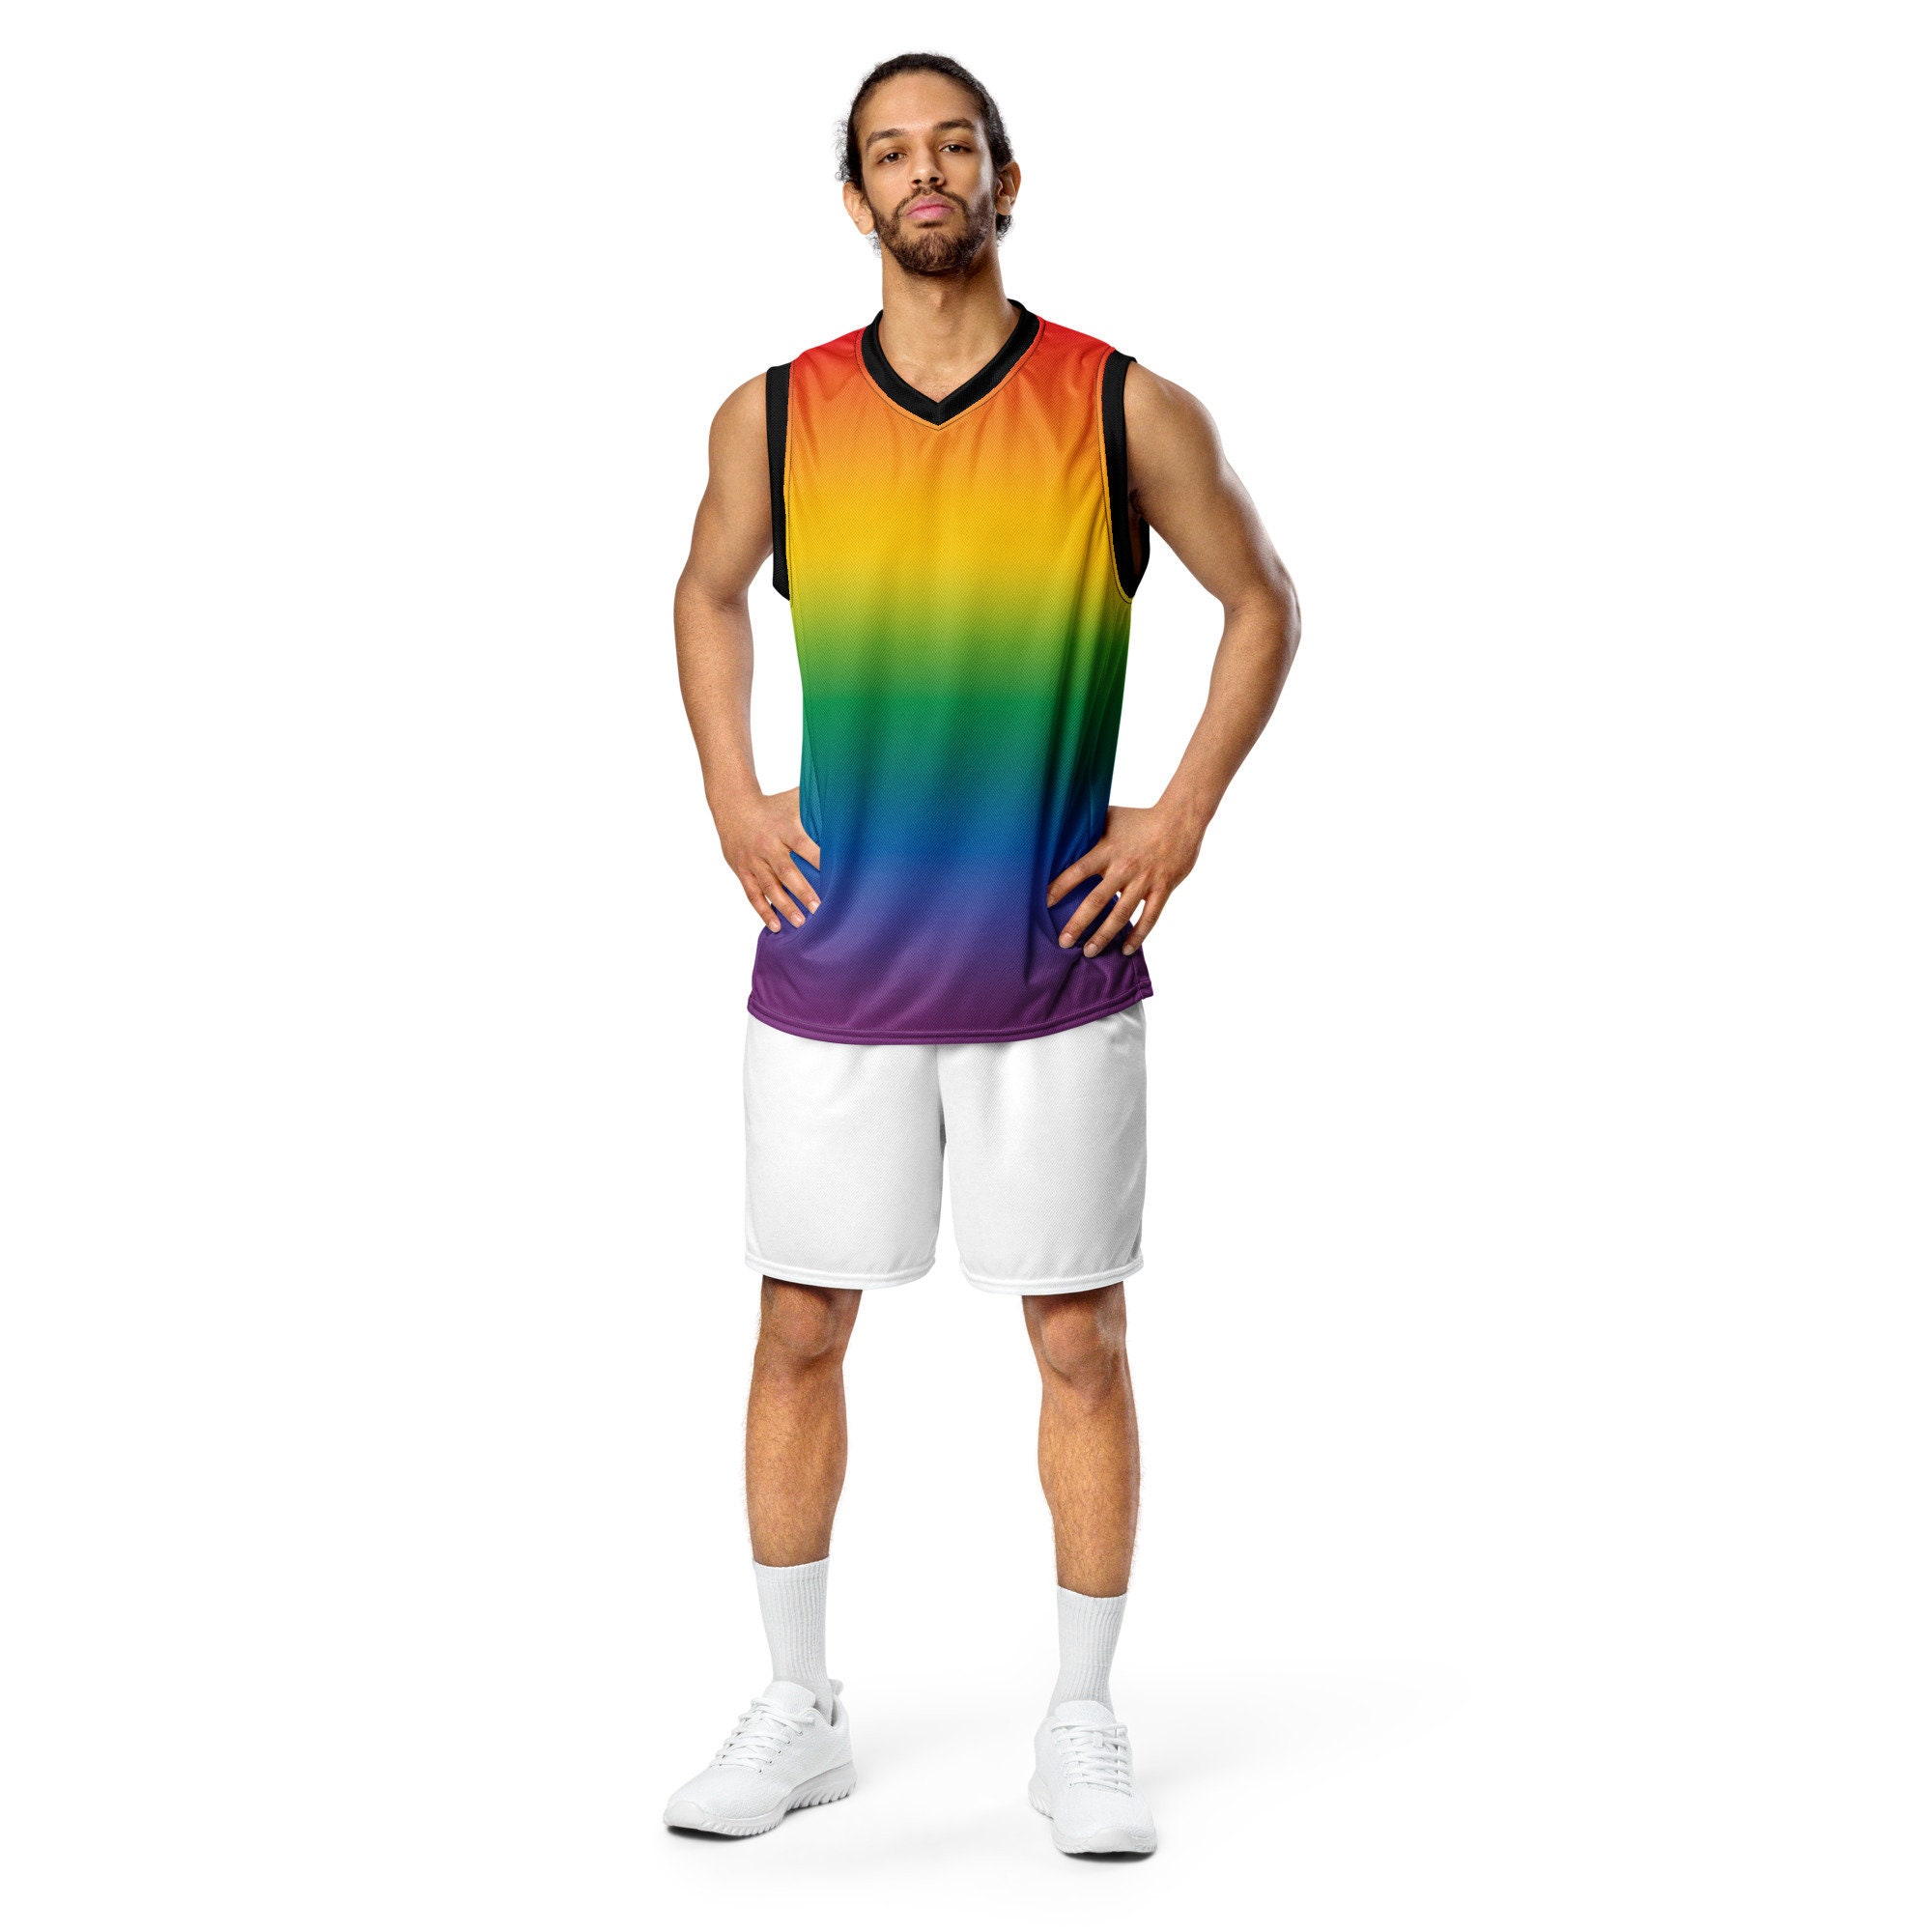 ChangemakerClothing Gay Pride Rainbow Basketball Jersey - Gradient Ombre Tank Top - Sleeveless Shirt